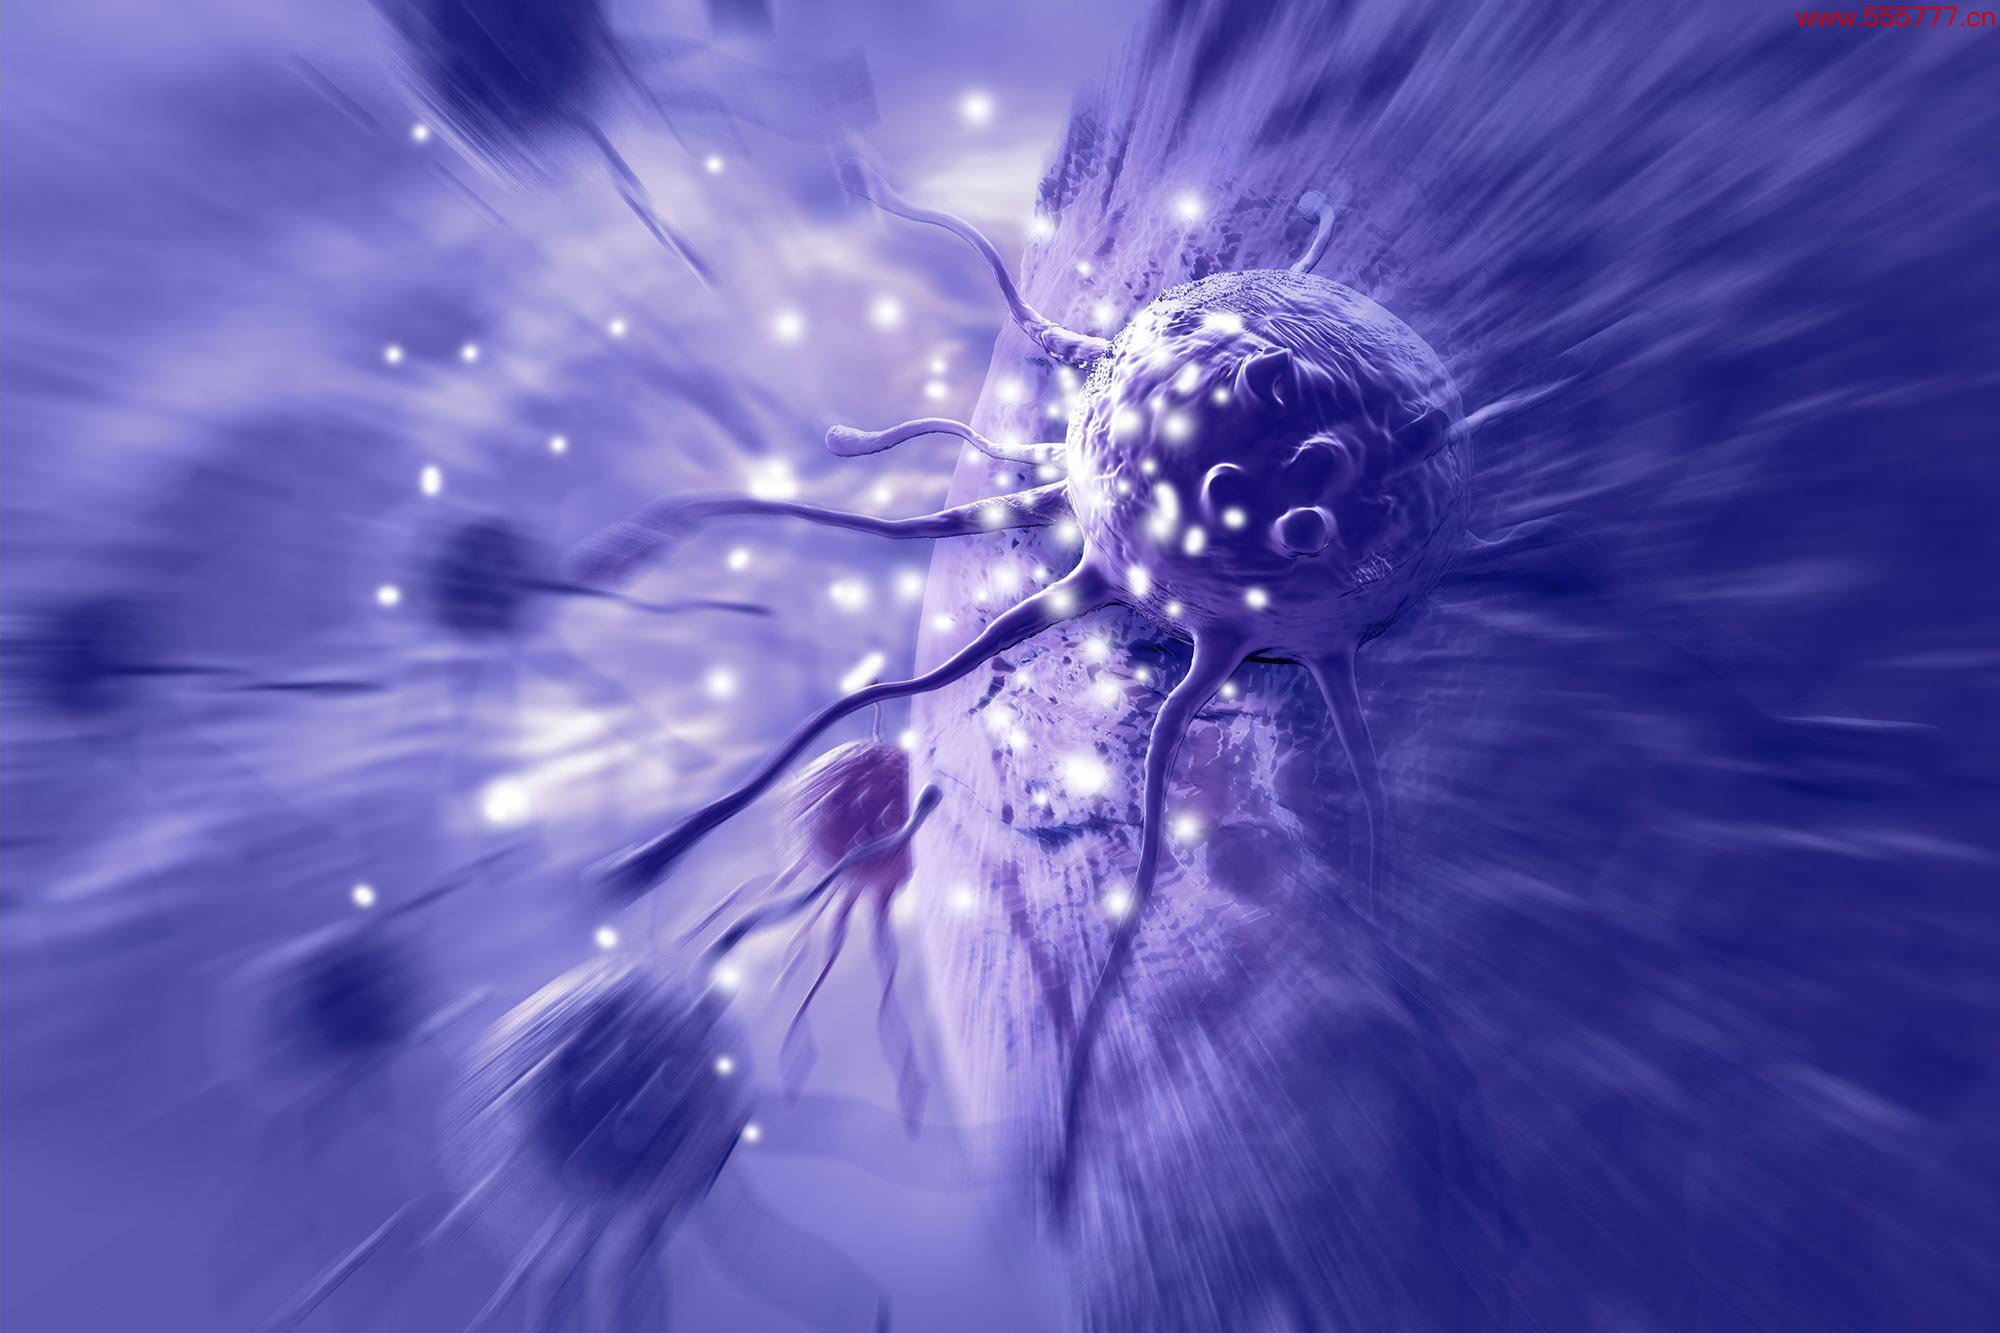 Invading-Cancer-Cells-Illustration.jpg